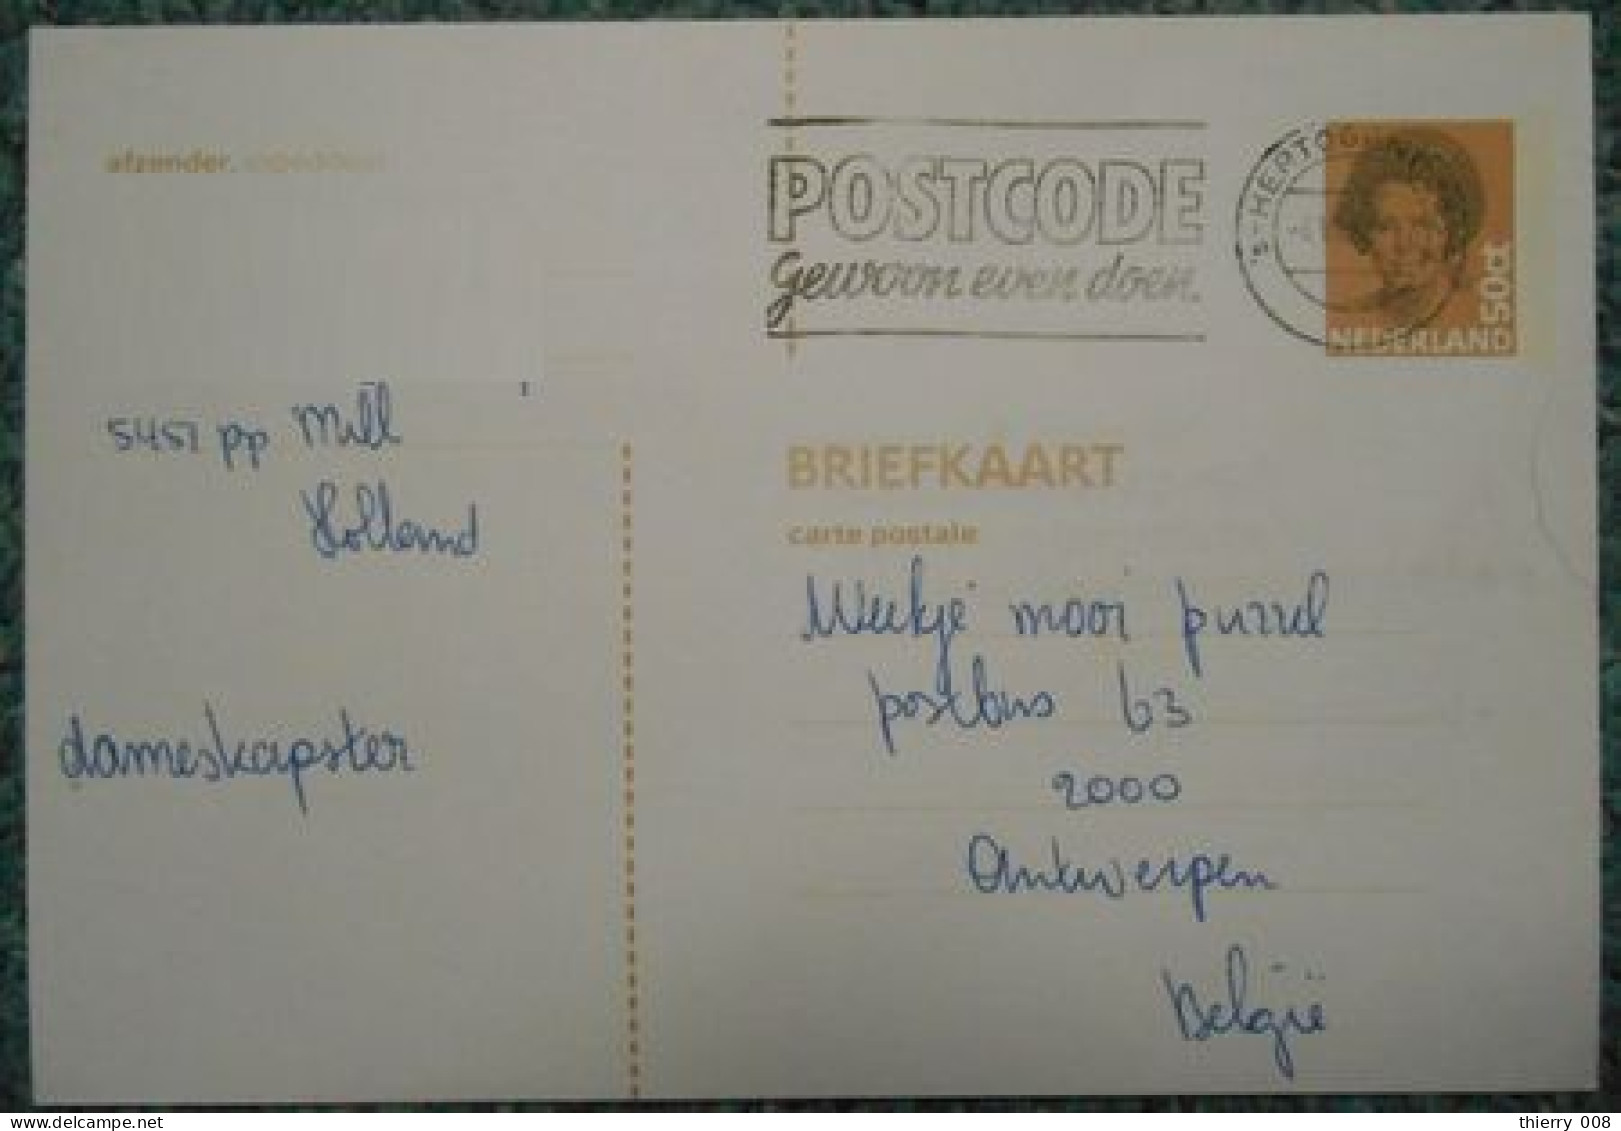 105- PAP Carte Nederland Pays-Bas Oblitération Postcode Gewoon Even Doen - Cartes-lettres